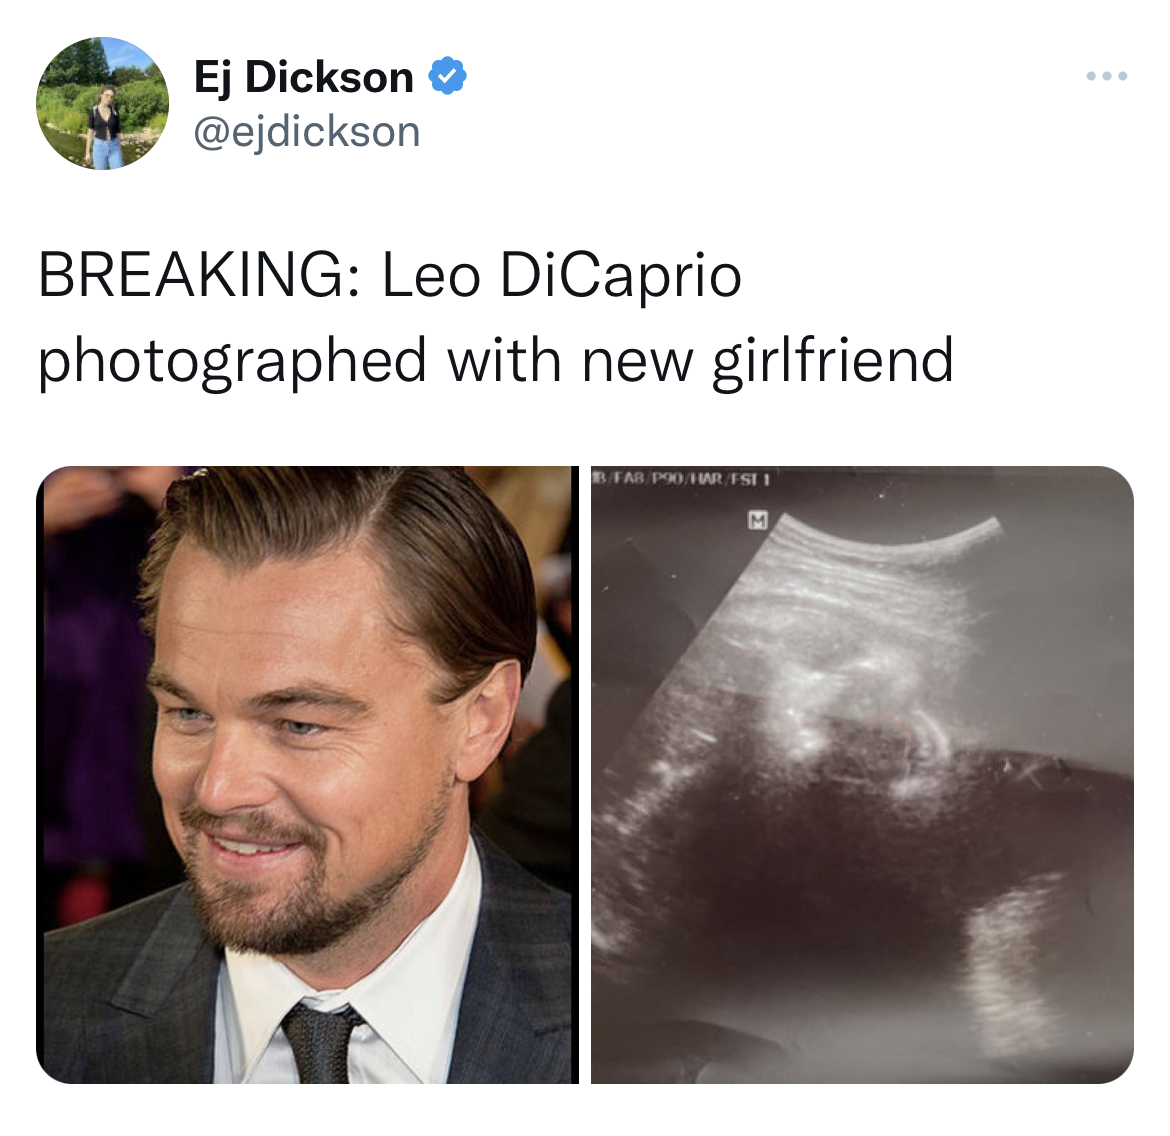 Leonardo DiCaprio Girlfriend Memes - leonardo dicaprio - Ej Dickson Breaking Leo DiCaprio photographed with new girlfriend Tag Har F